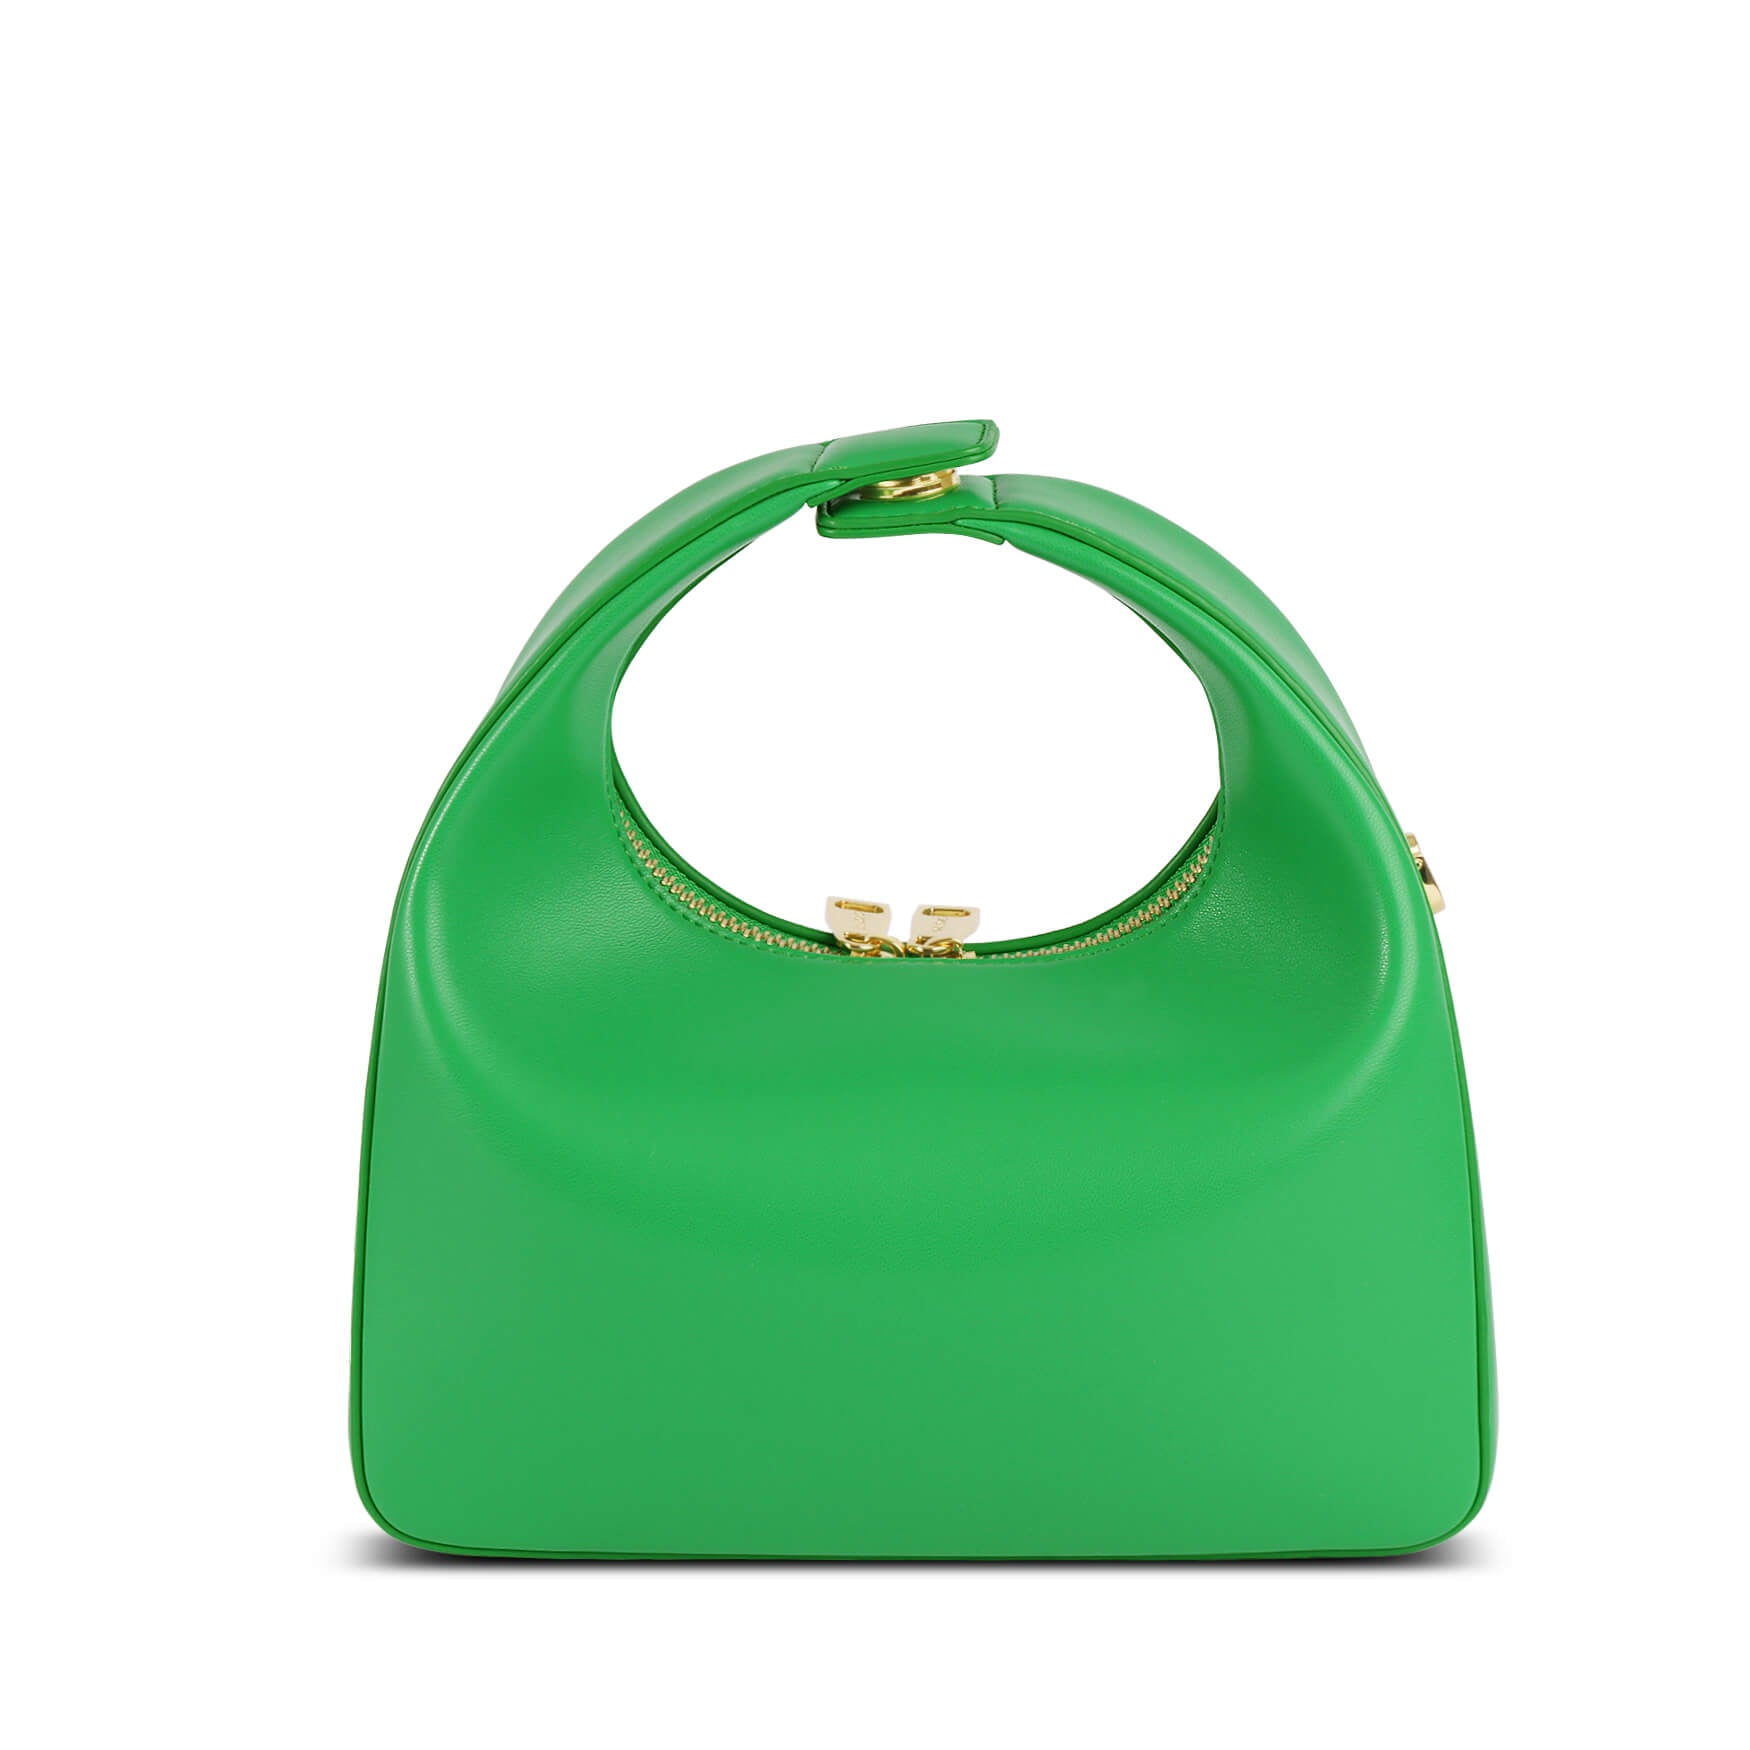 SINBONO Vegan Handbag - Best Price Sustainable Fashion Brand